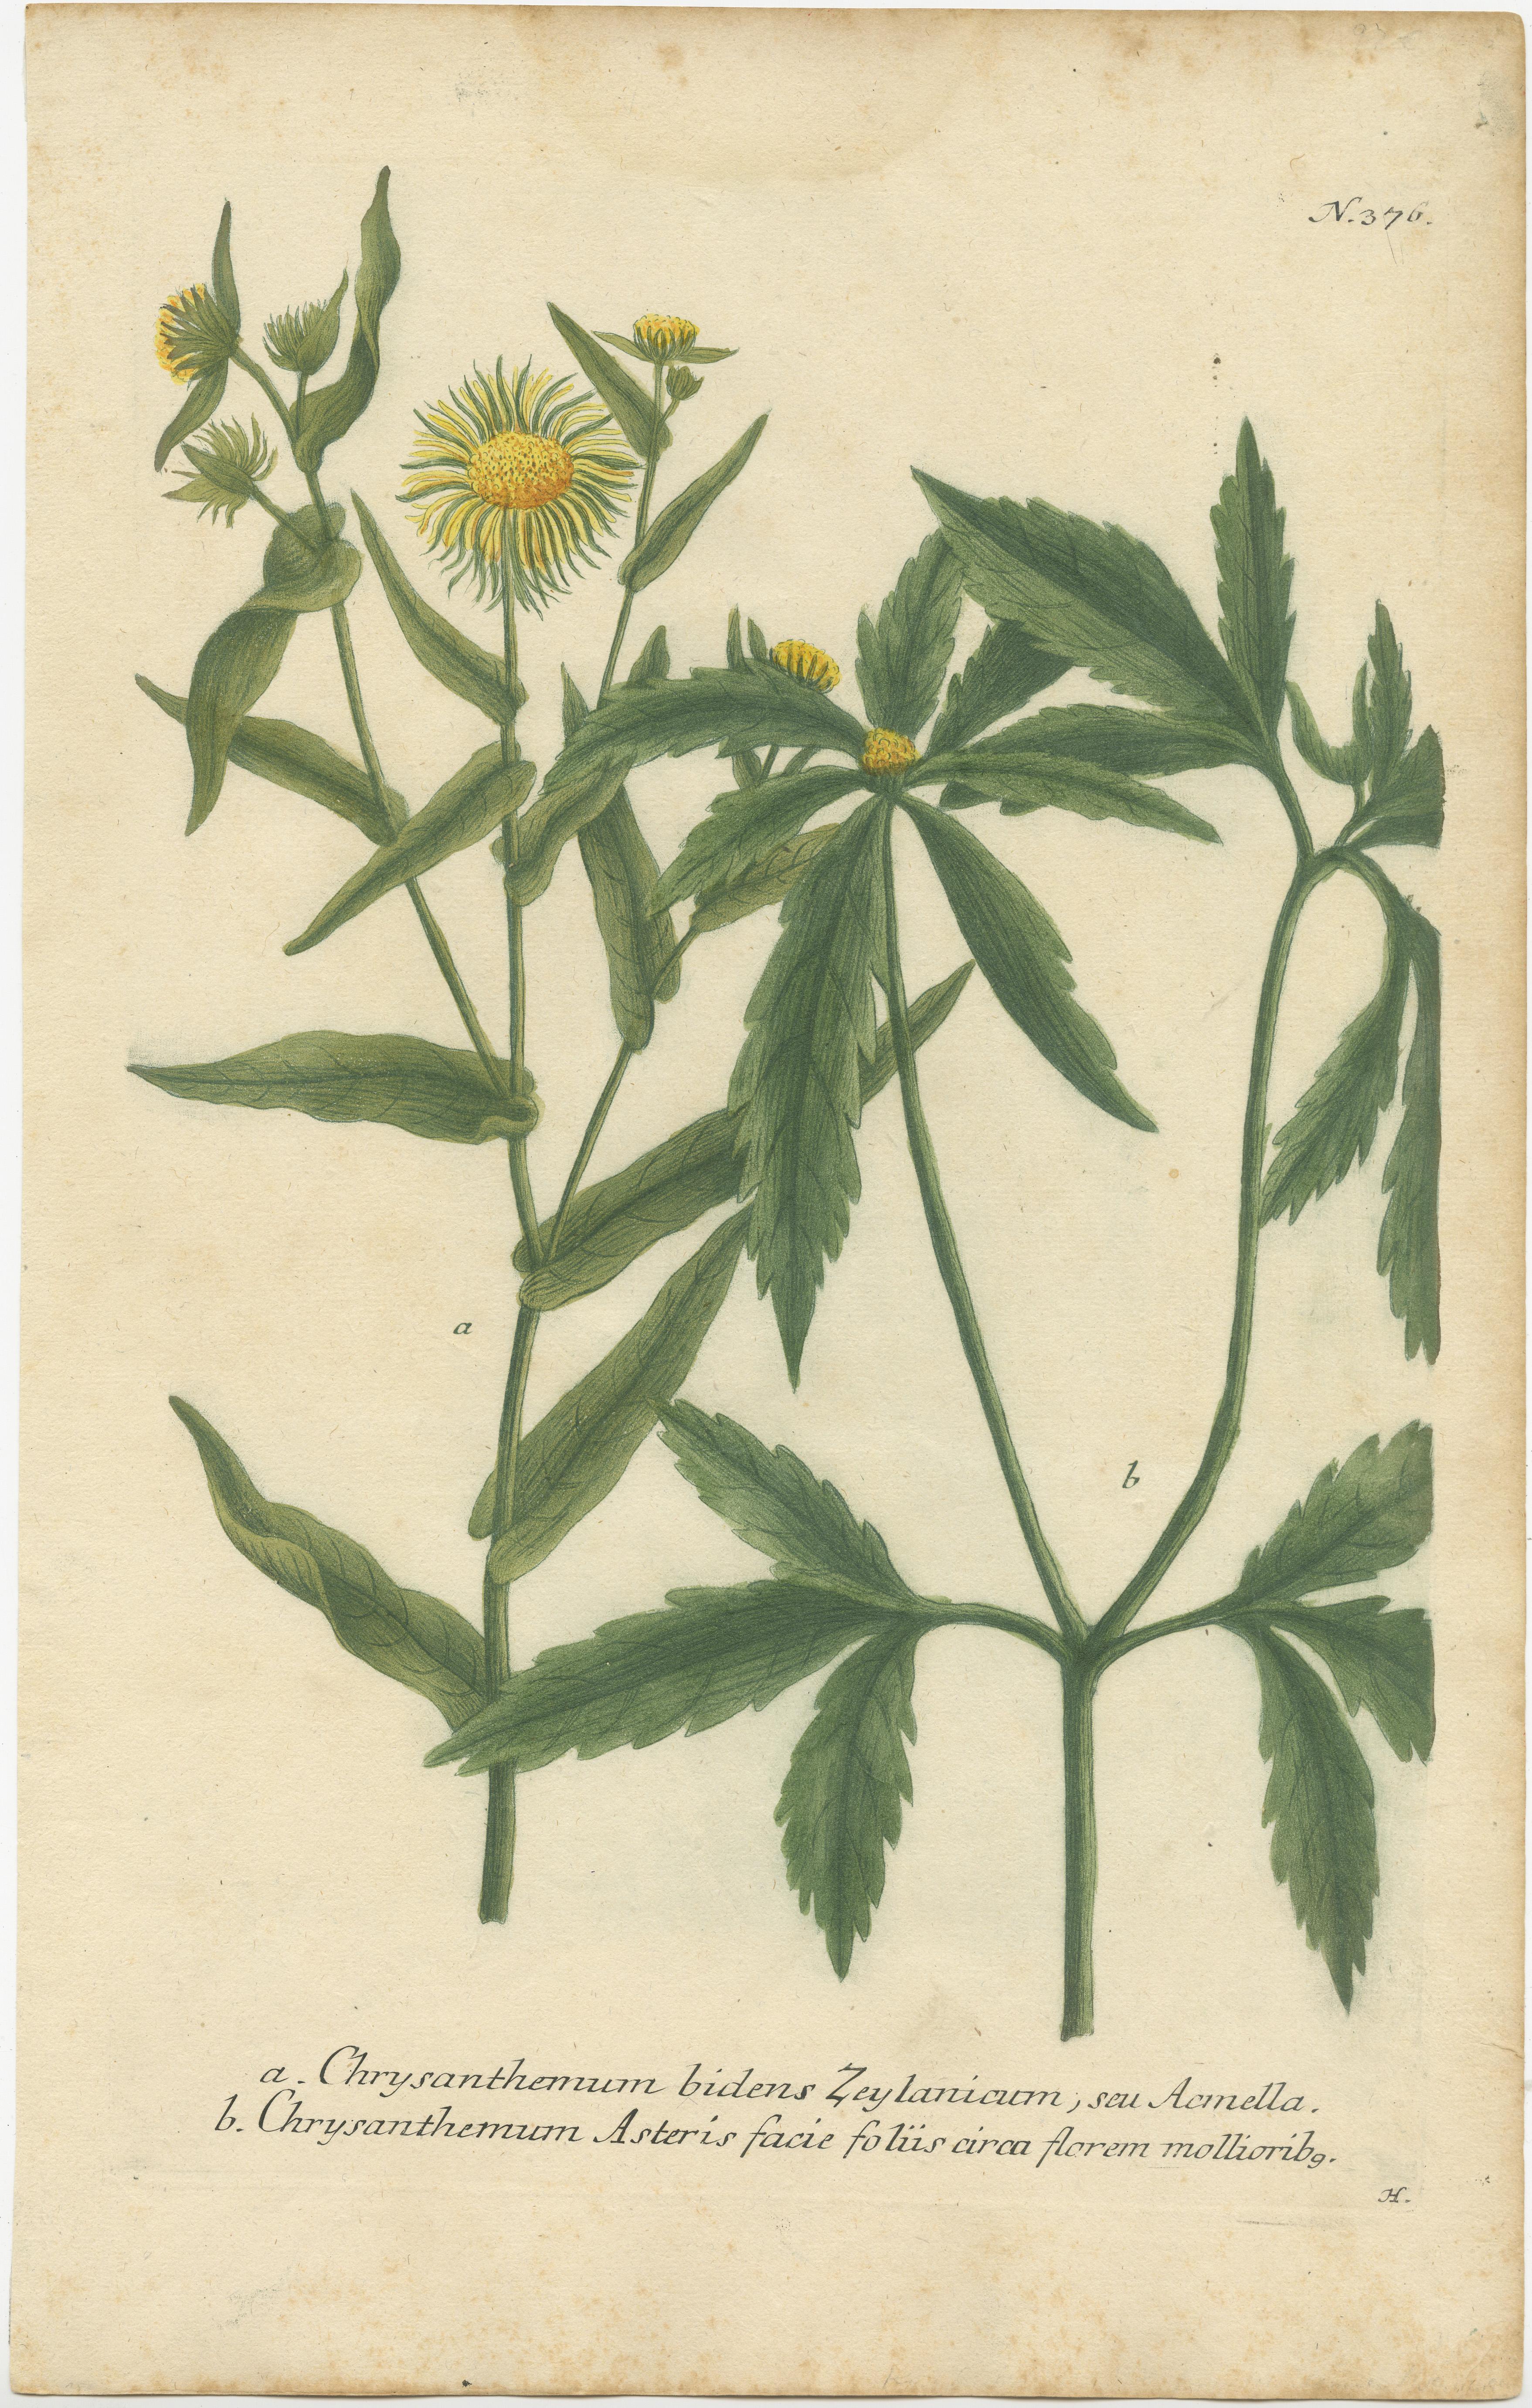 Antique print titled 'Chrysanthemum bidens (..)'. Hand-finished mezzotint engraving of two chrysanthemum species. This print originates from 'Phytanthoza Iconographia' by Johann Wilhelm Weinmann. Published circa 1740. 

Johann Wilhelm Weinmann was